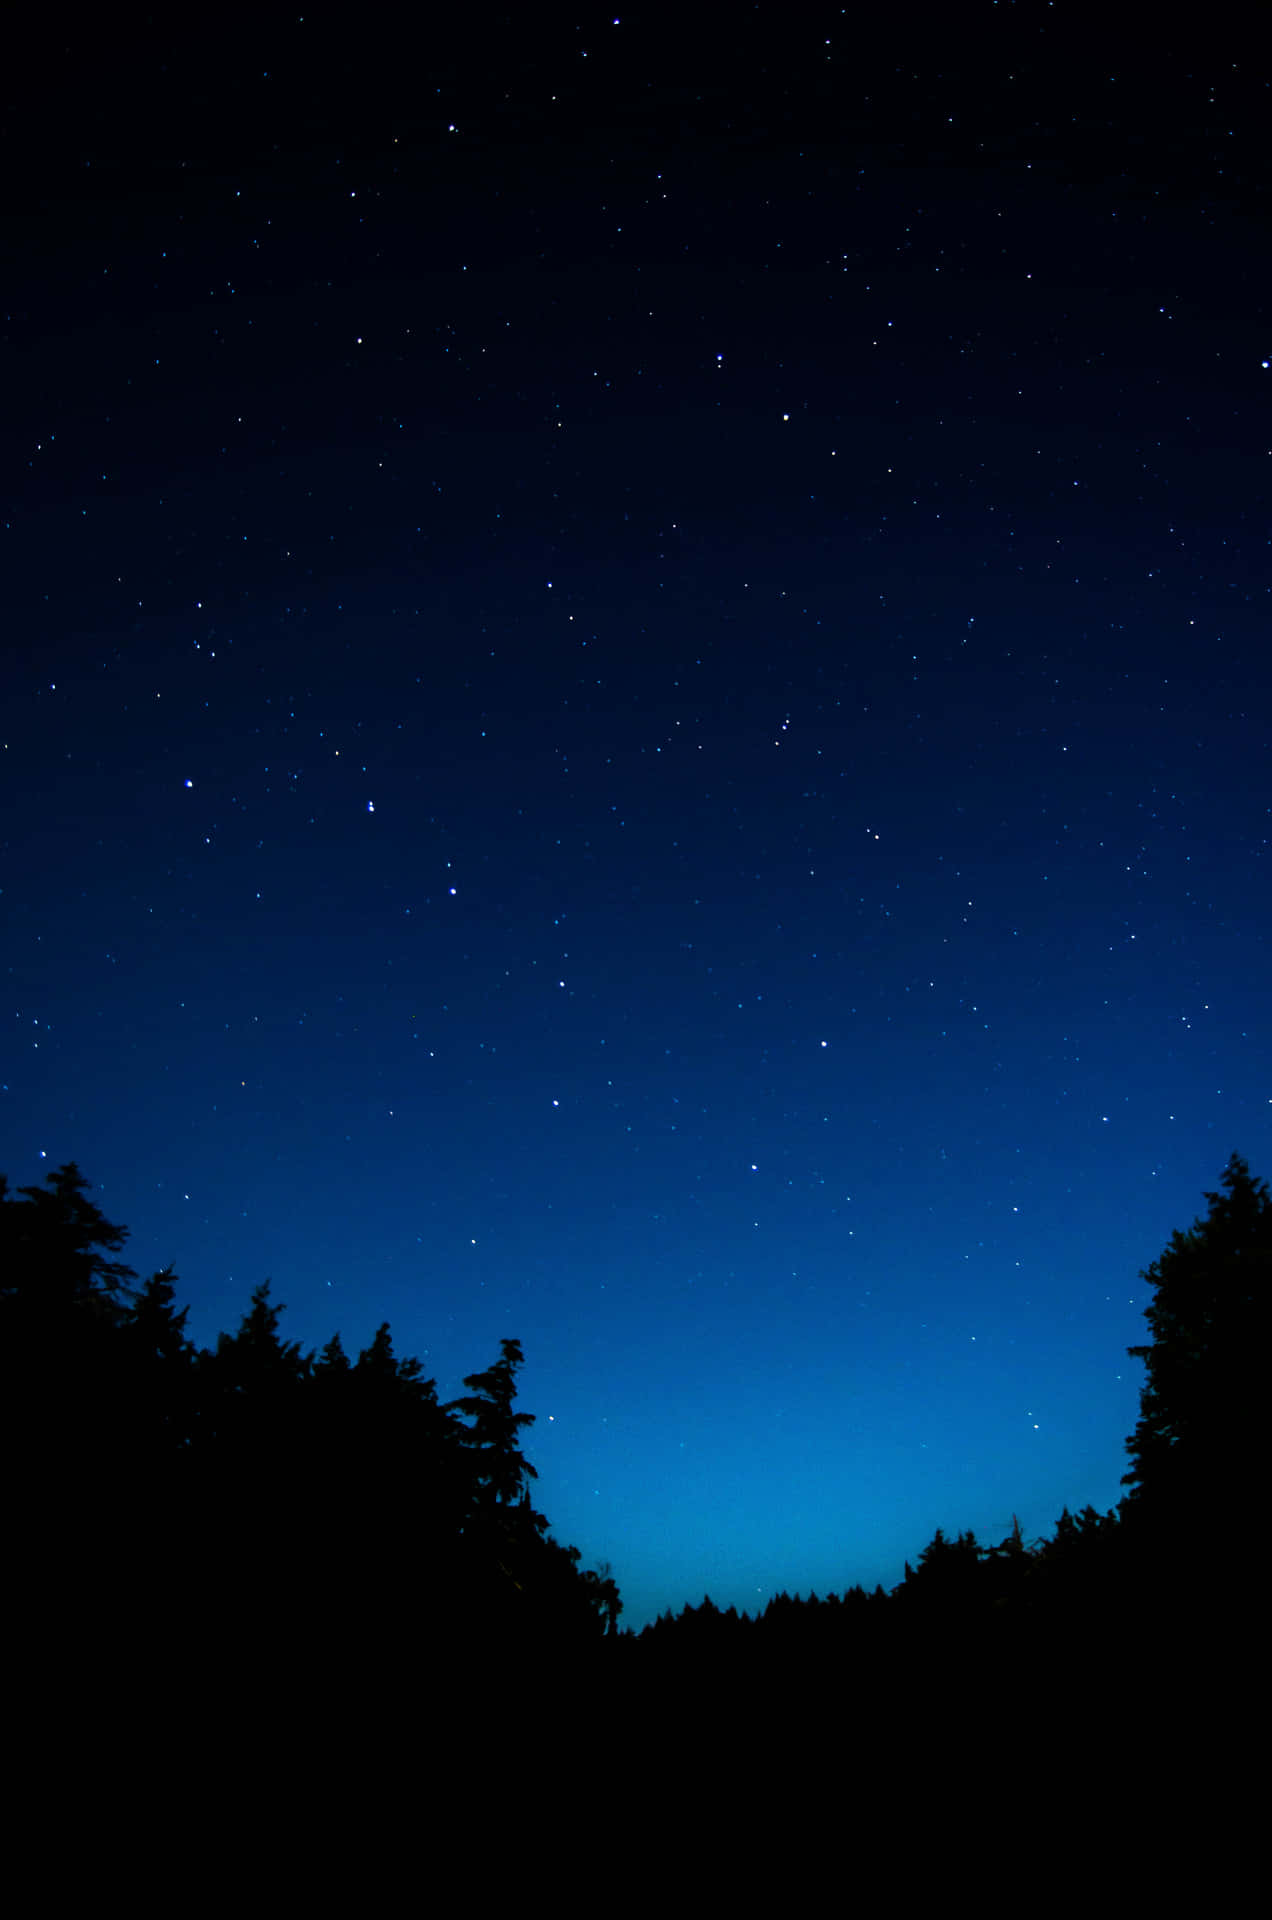 "Gazing up at a beautiful night sky."